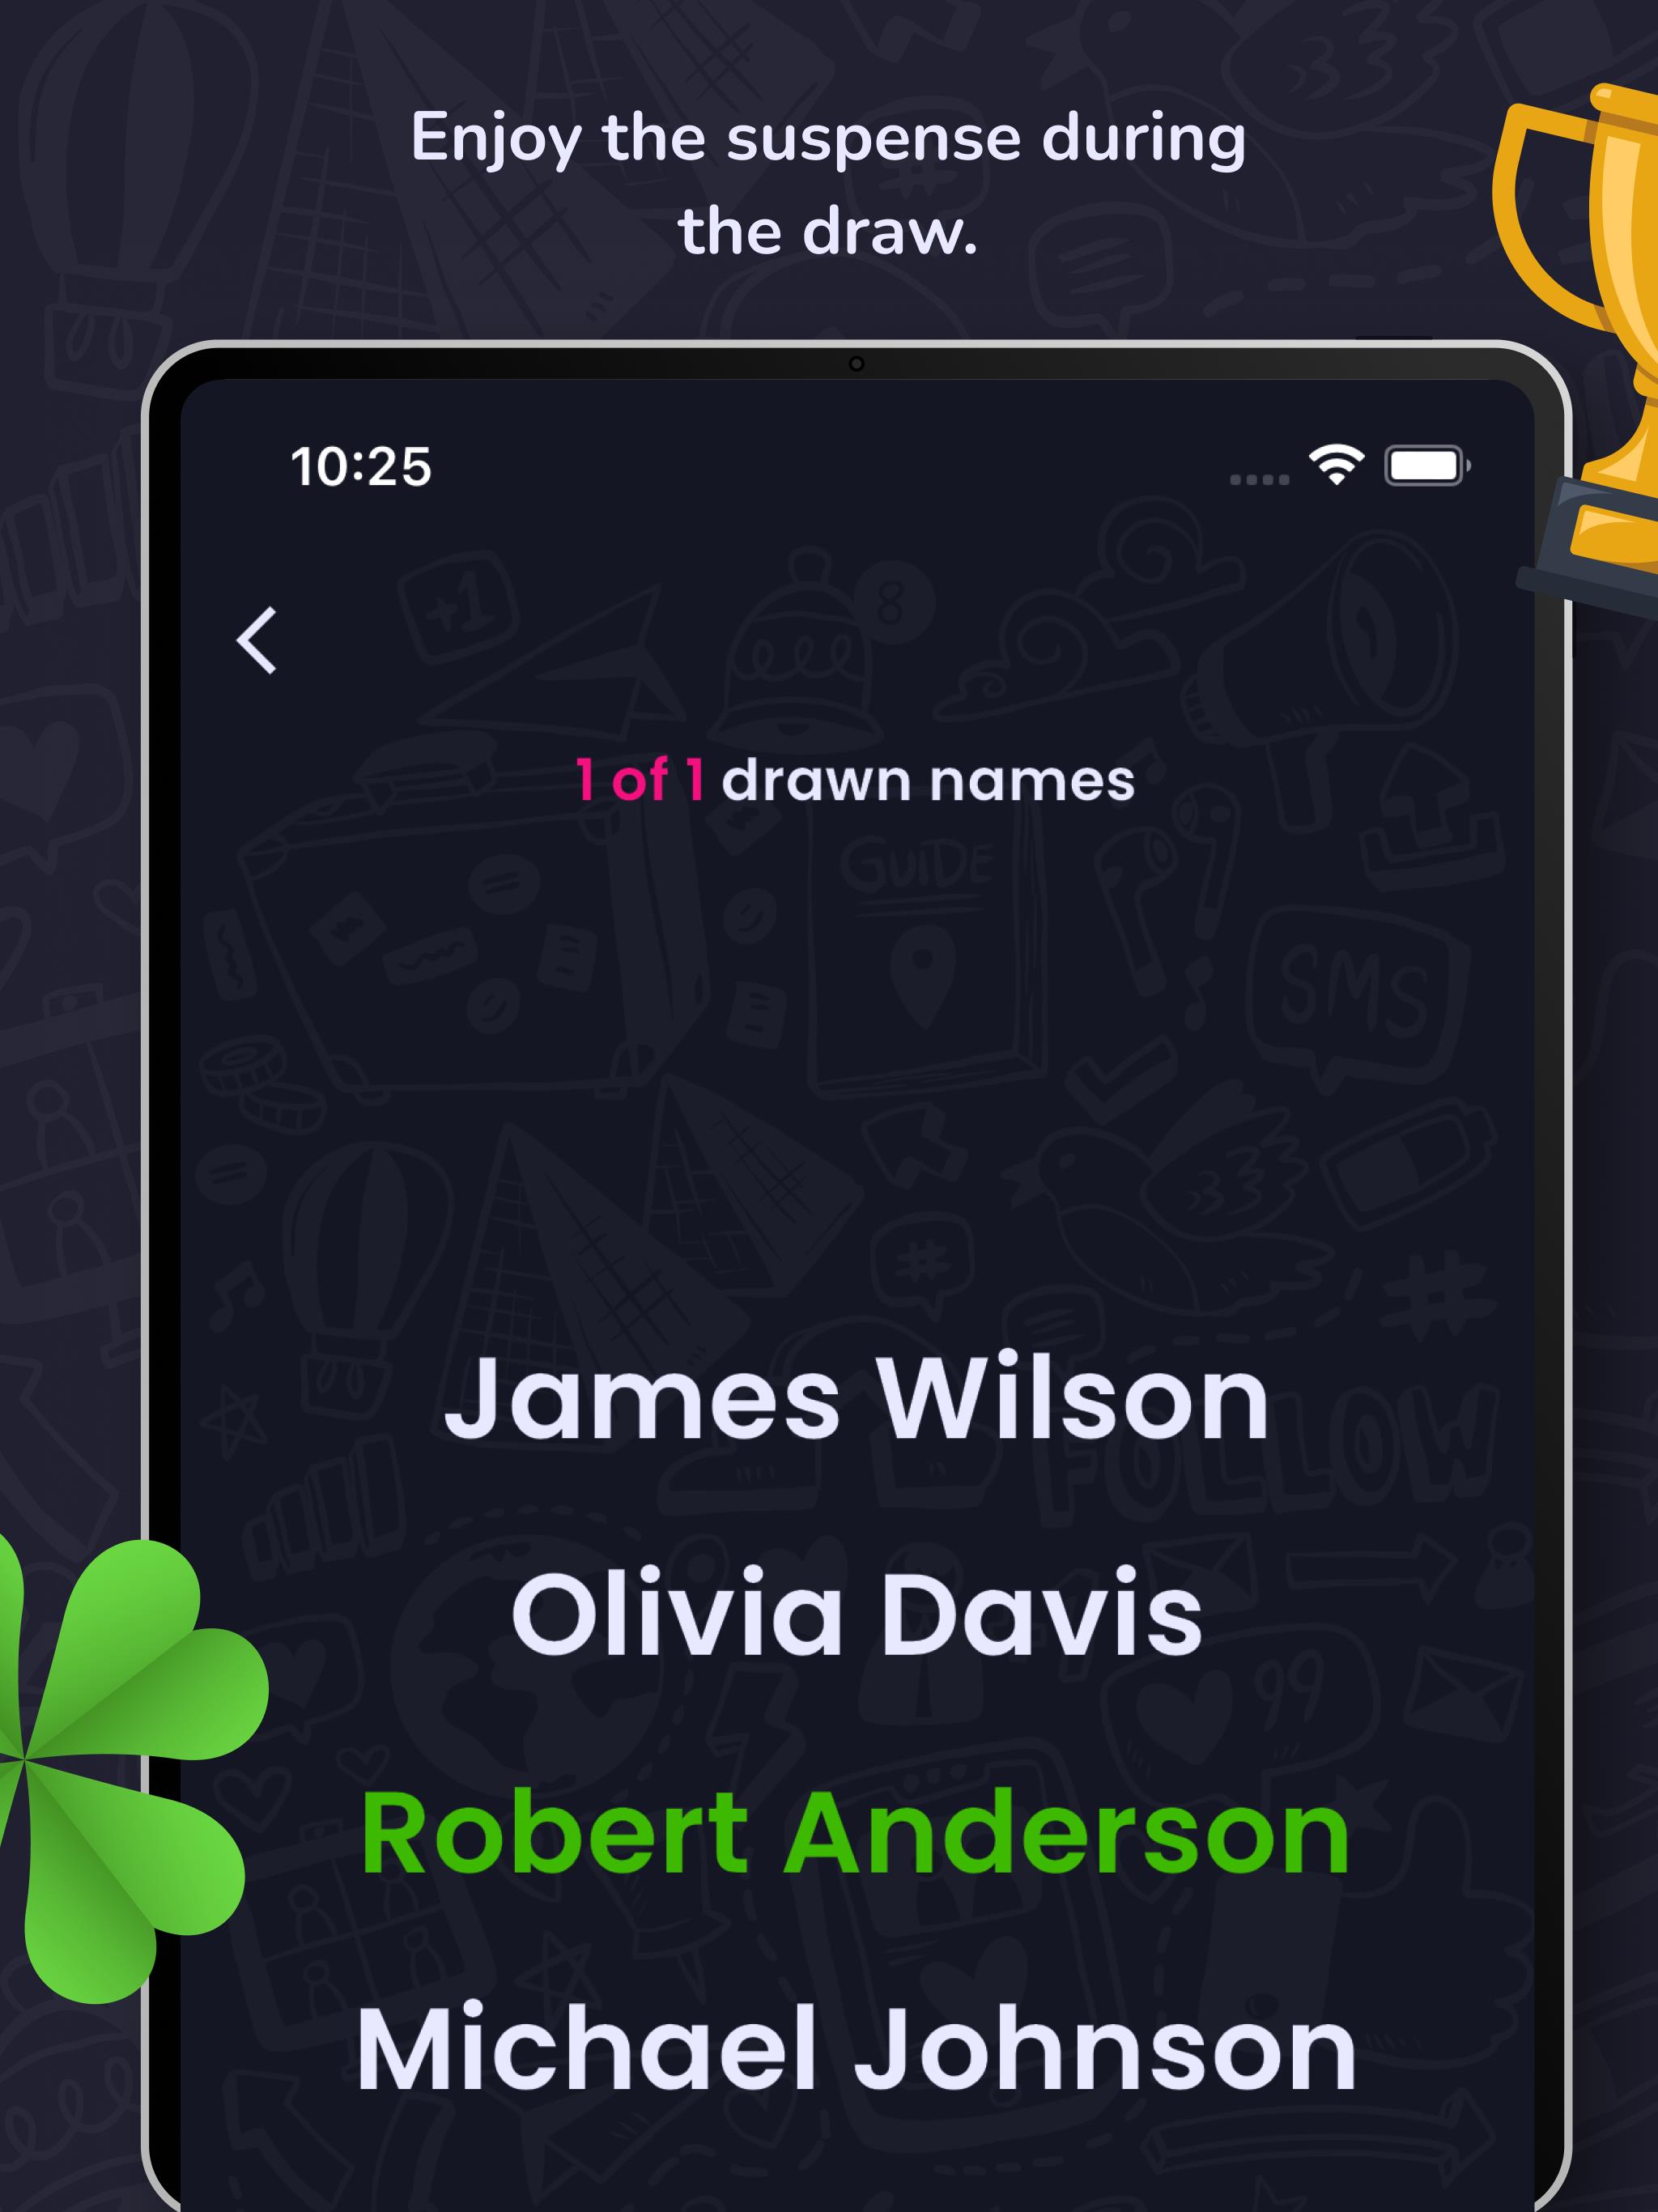 Random name picker for raffles Screenshot 13